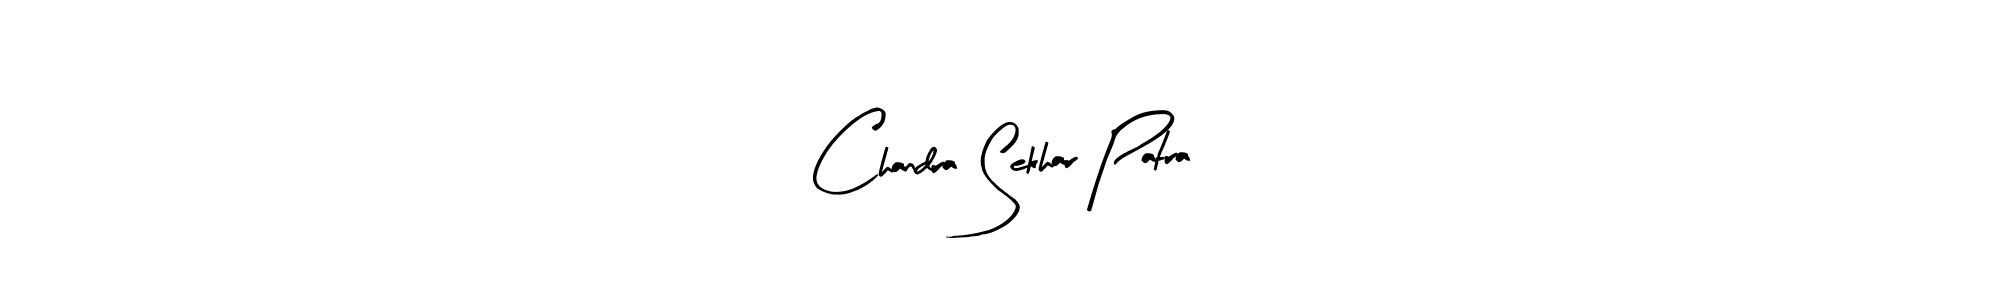 How to Draw Chandra Sekhar Patra signature style? Arty Signature is a latest design signature styles for name Chandra Sekhar Patra. Chandra Sekhar Patra signature style 8 images and pictures png